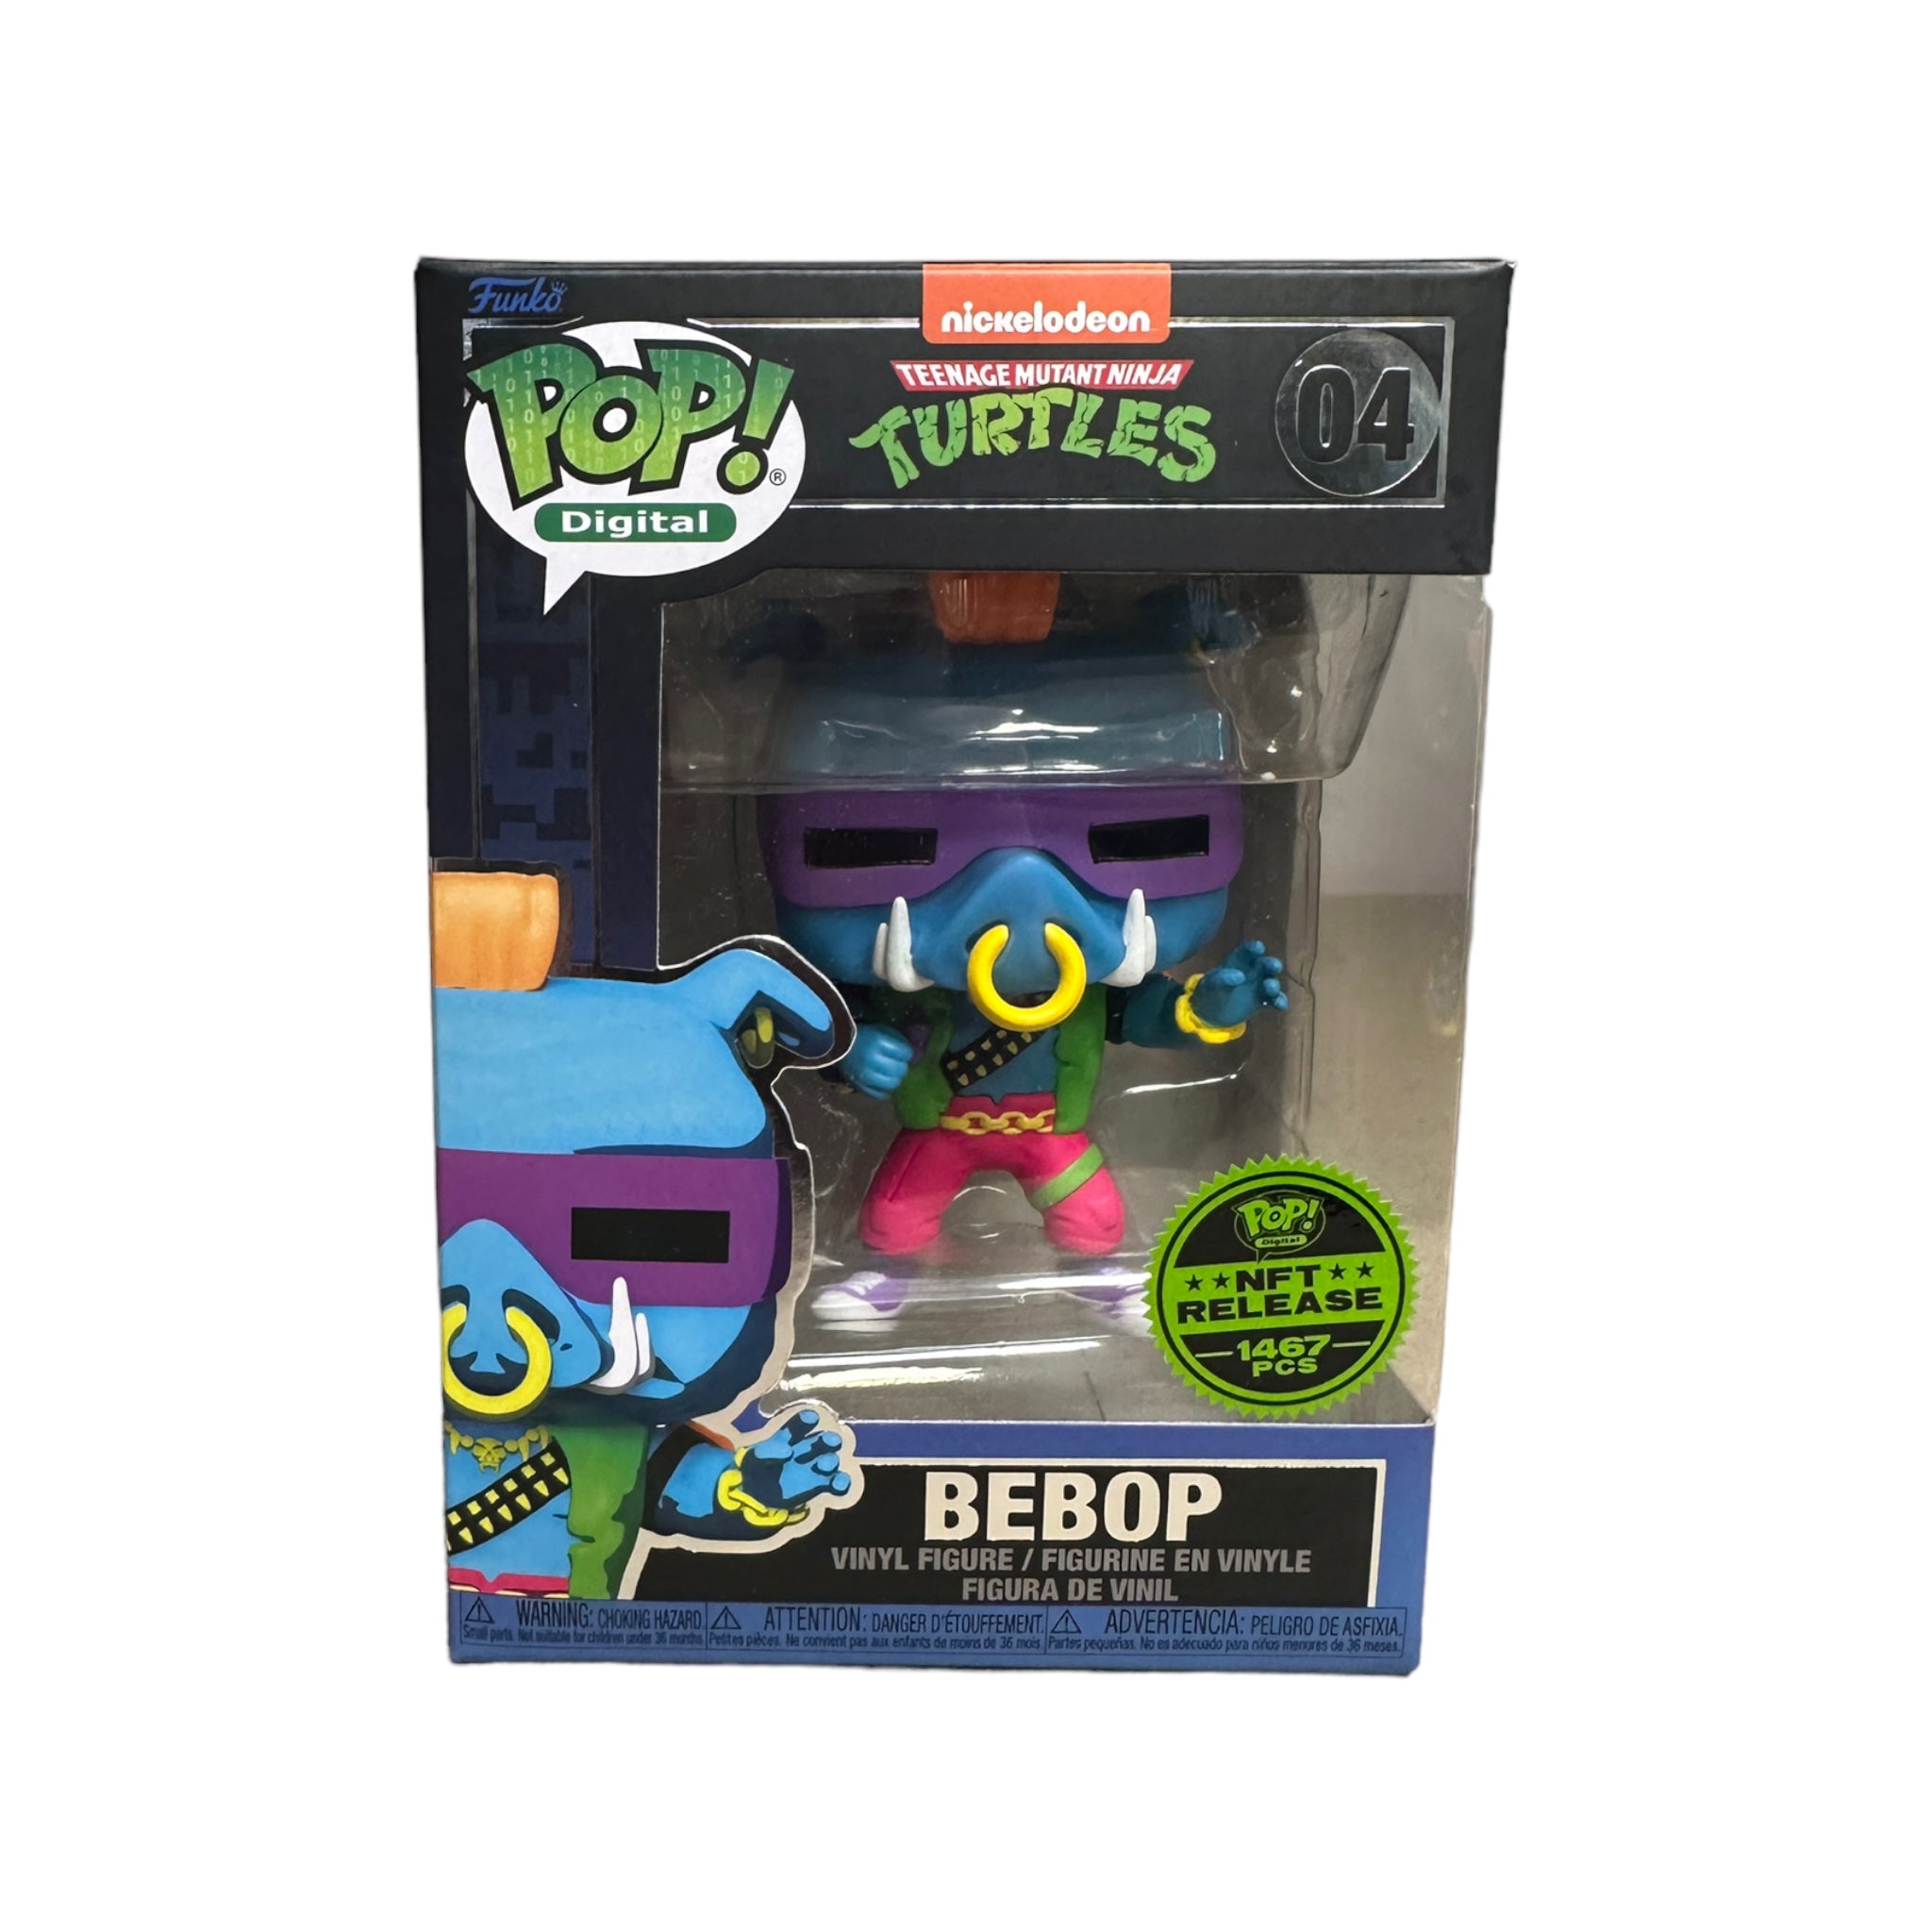 Bebop #04 Funko Pop! - Teenage Mutant Ninja Turtles - NFT Release Exclusive LE1467 Pcs - Condition 9/10